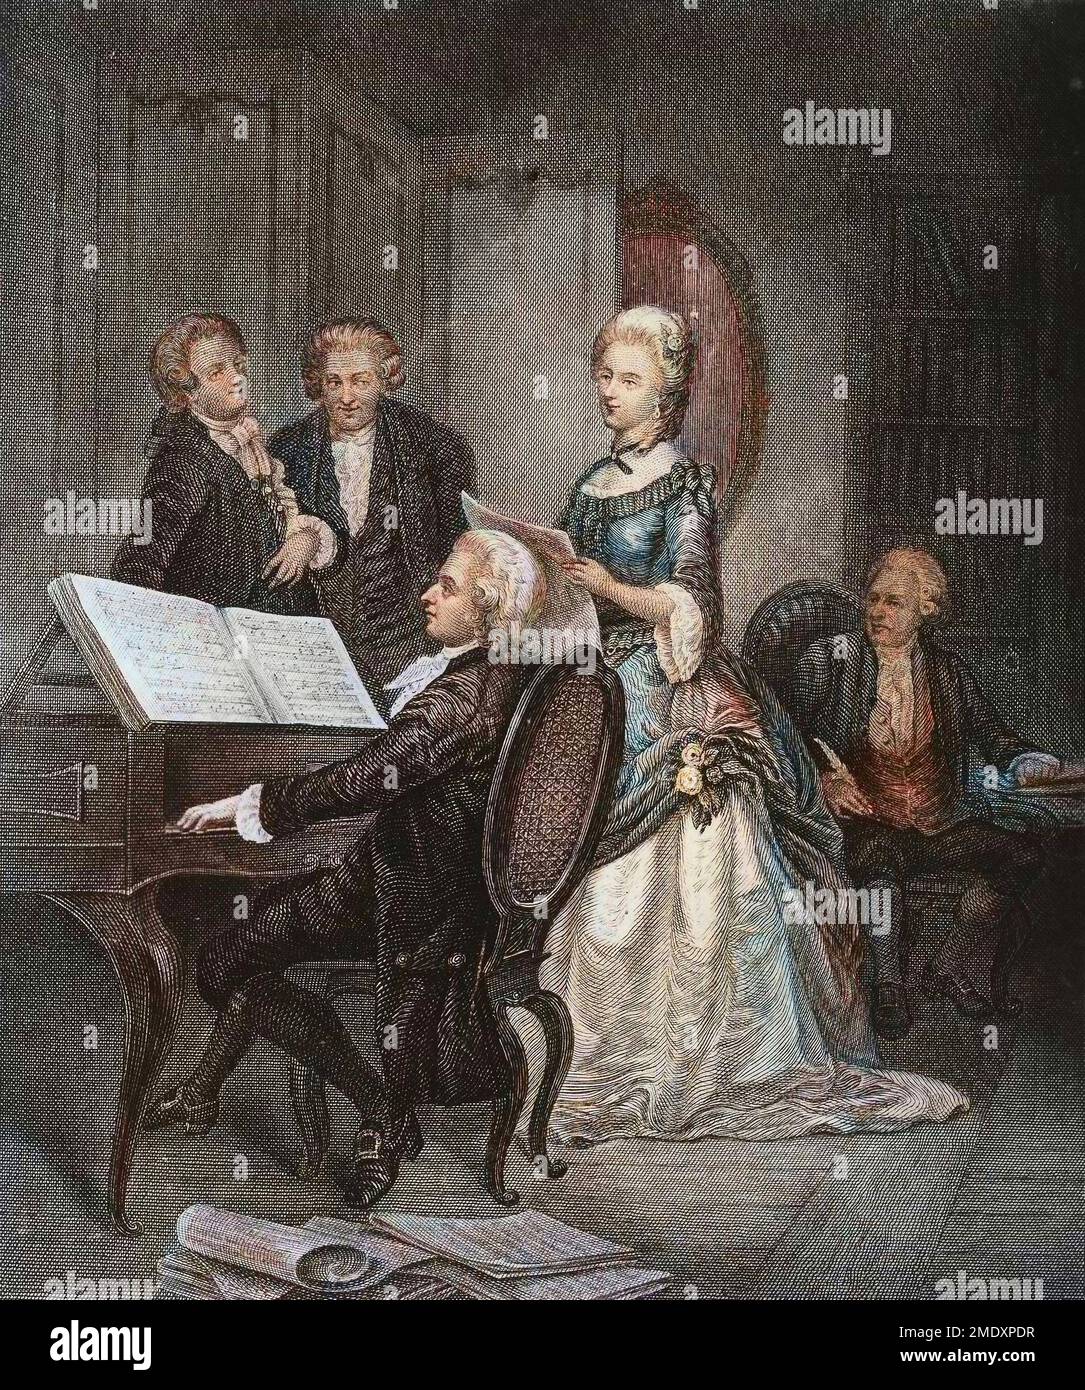 Wolfang Amadeus Mozart au piano (1756-1791) avec Caterina (Katharina) Cavalieri (Katharina Magdalena Josepha cavalier) . Gravure du 19eme siecle. Banque D'Images